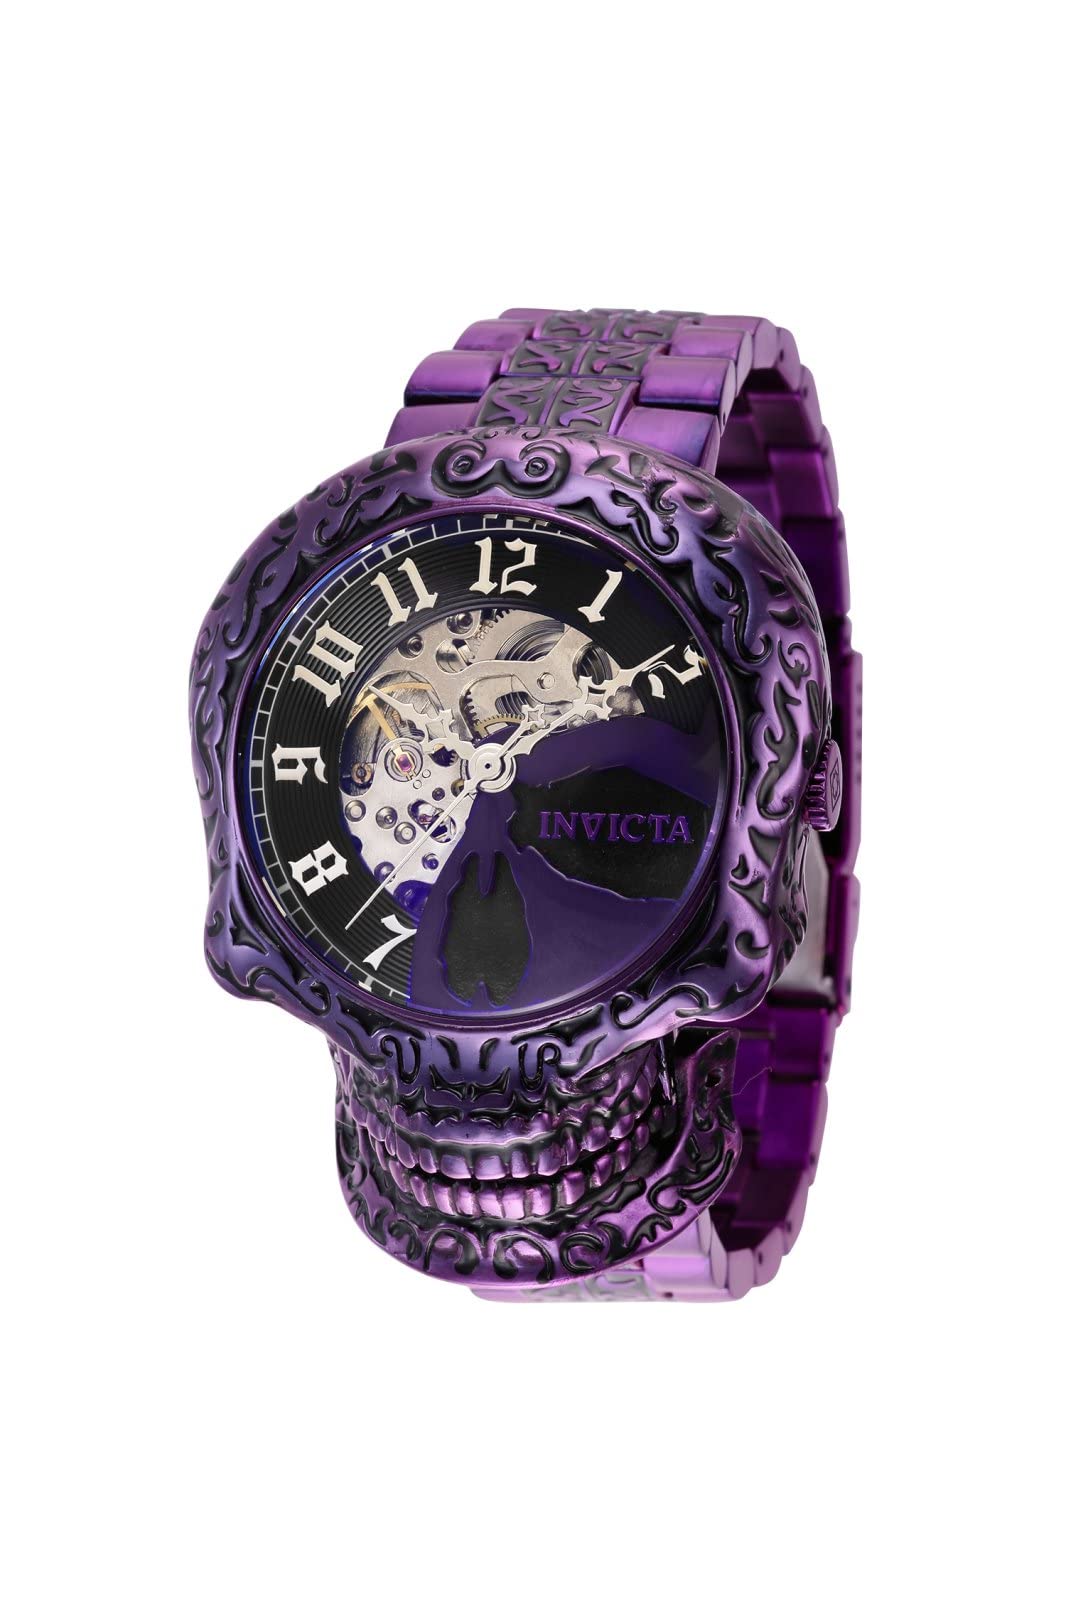 Invicta Men's Artist 39184 Automatic Watch